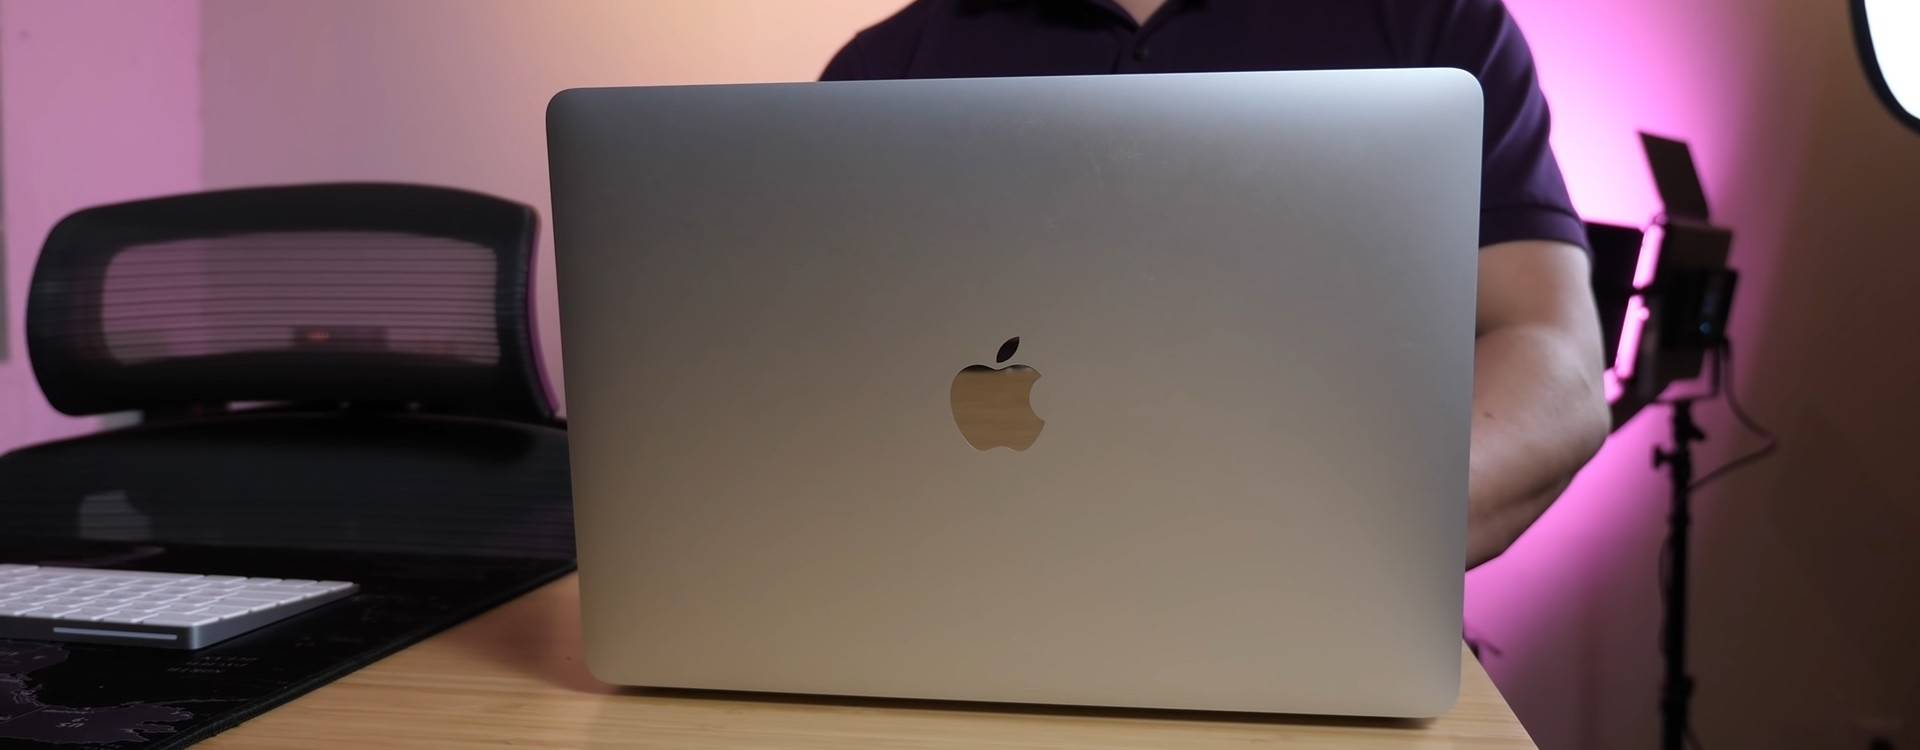 Apple MacBook Air lang